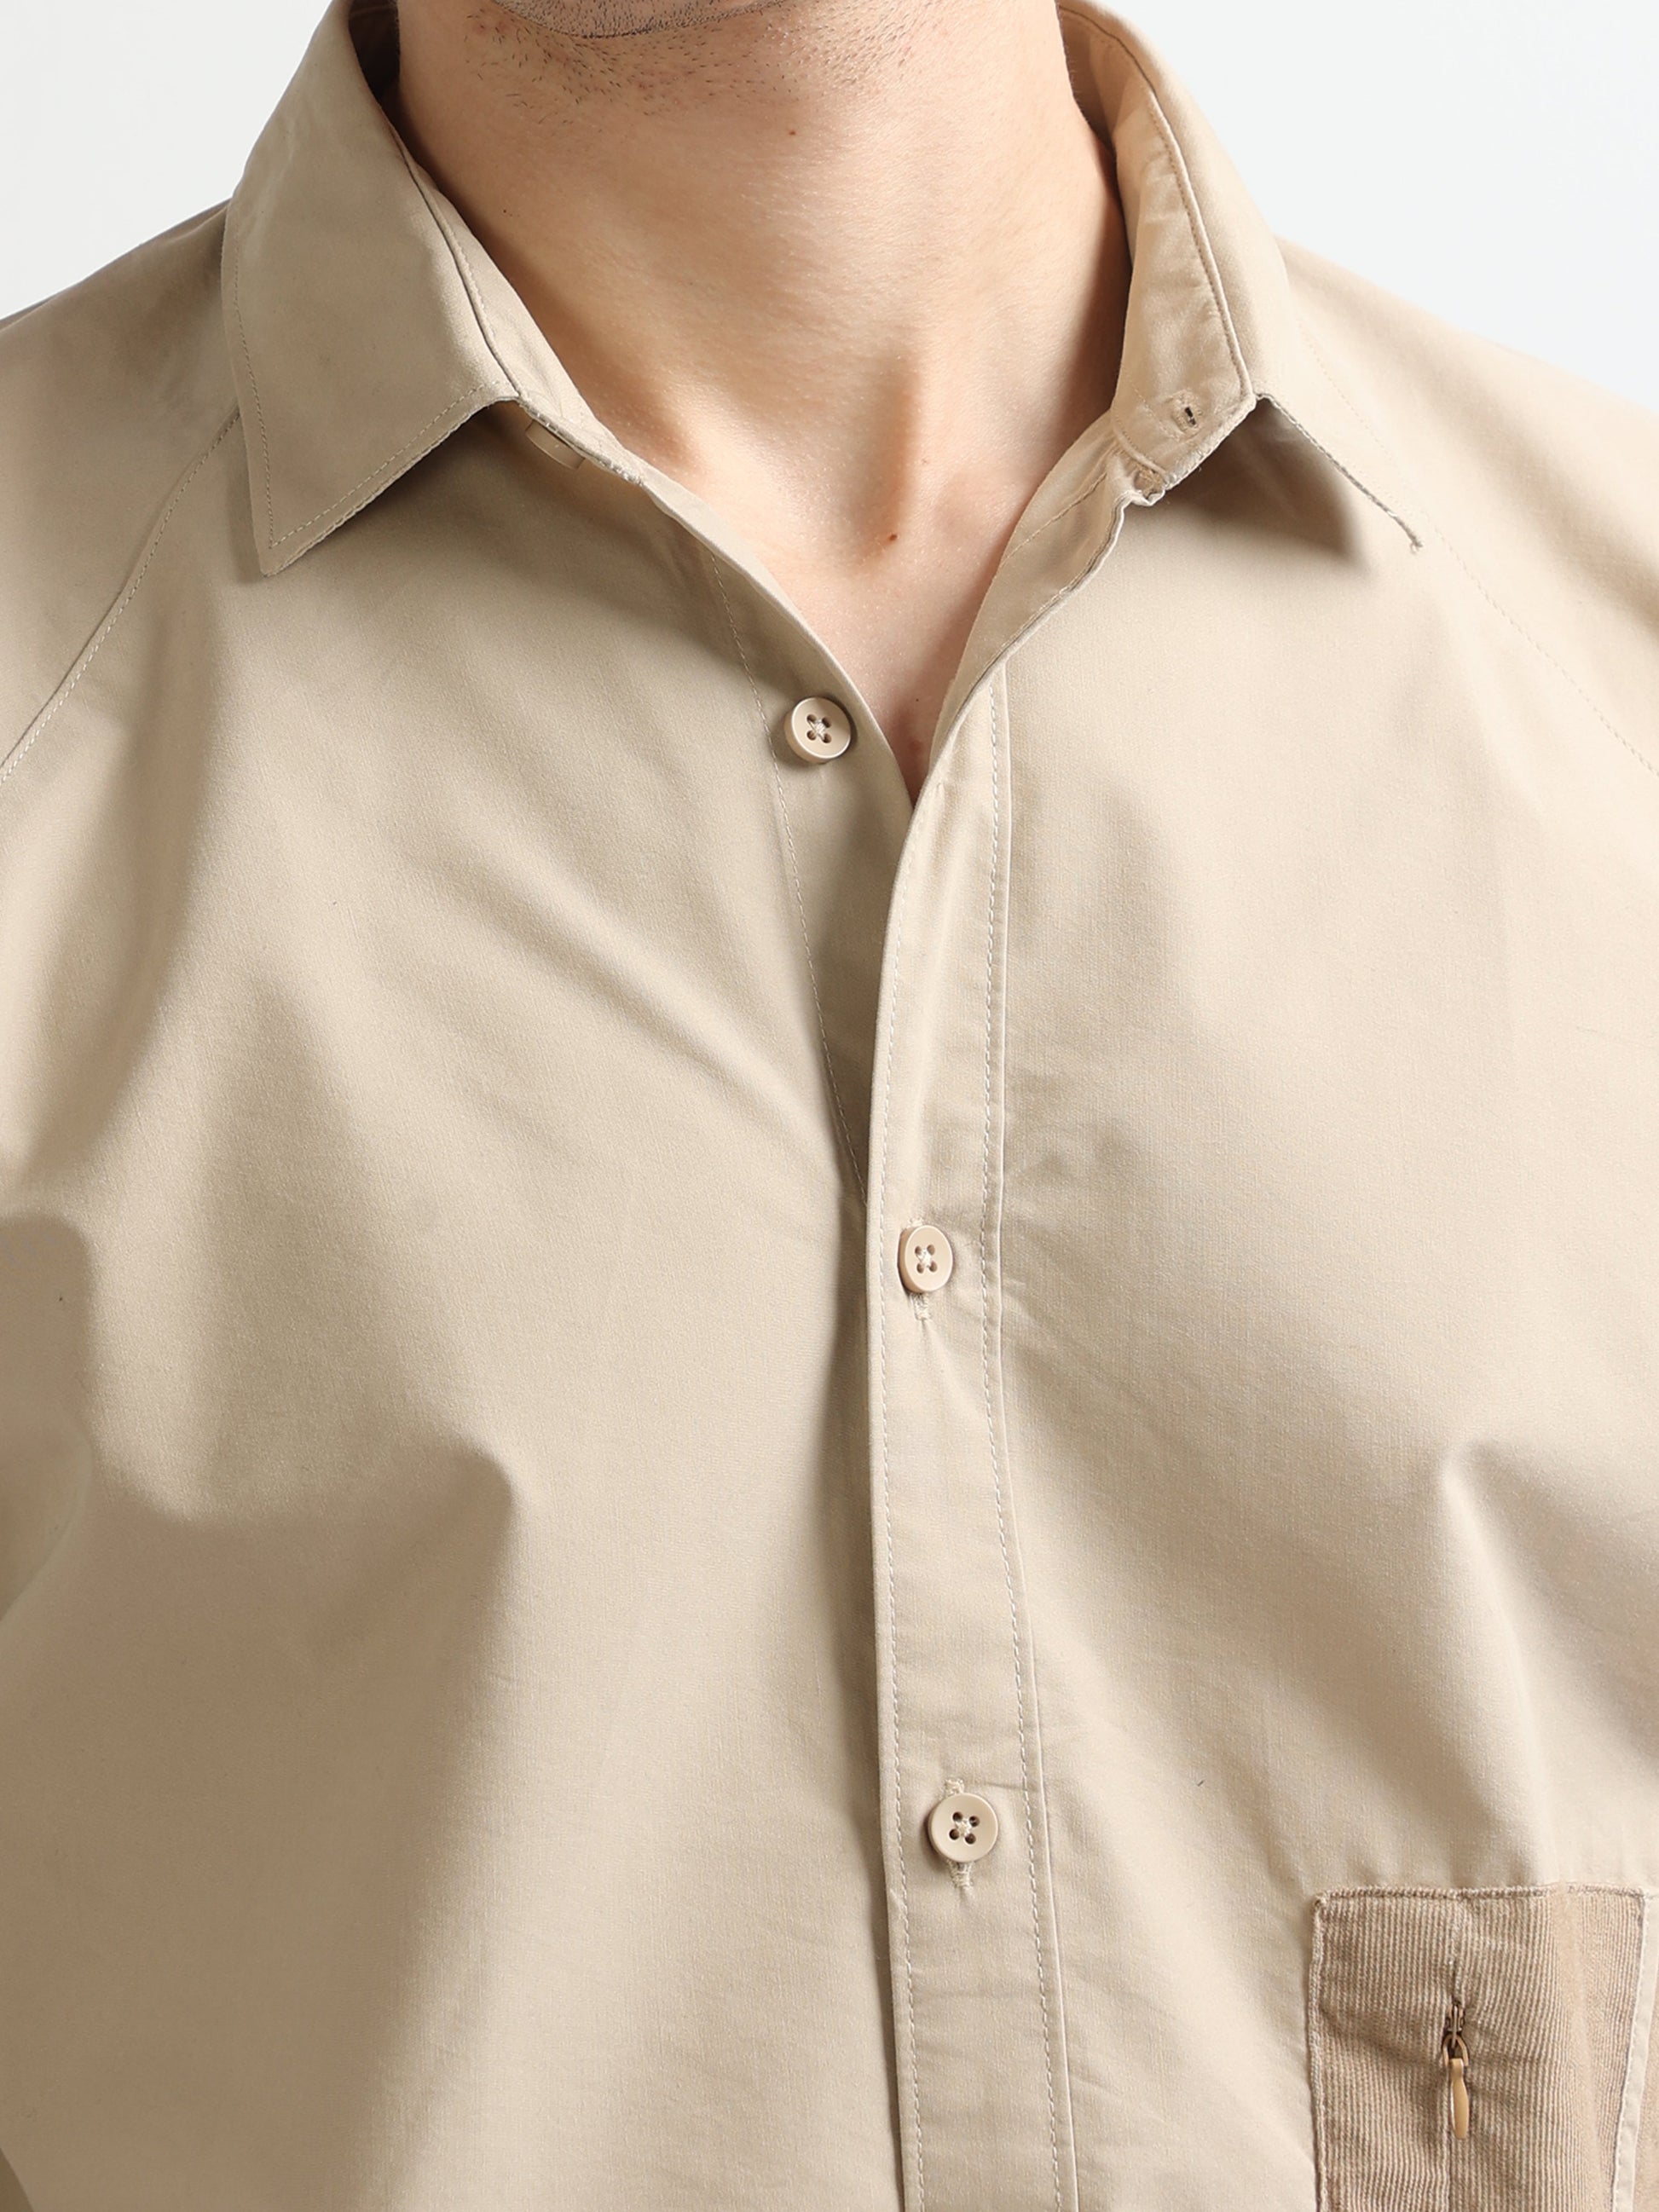 Buy Raglan Full Sleeves Shirt With Stylish Pocket Online.